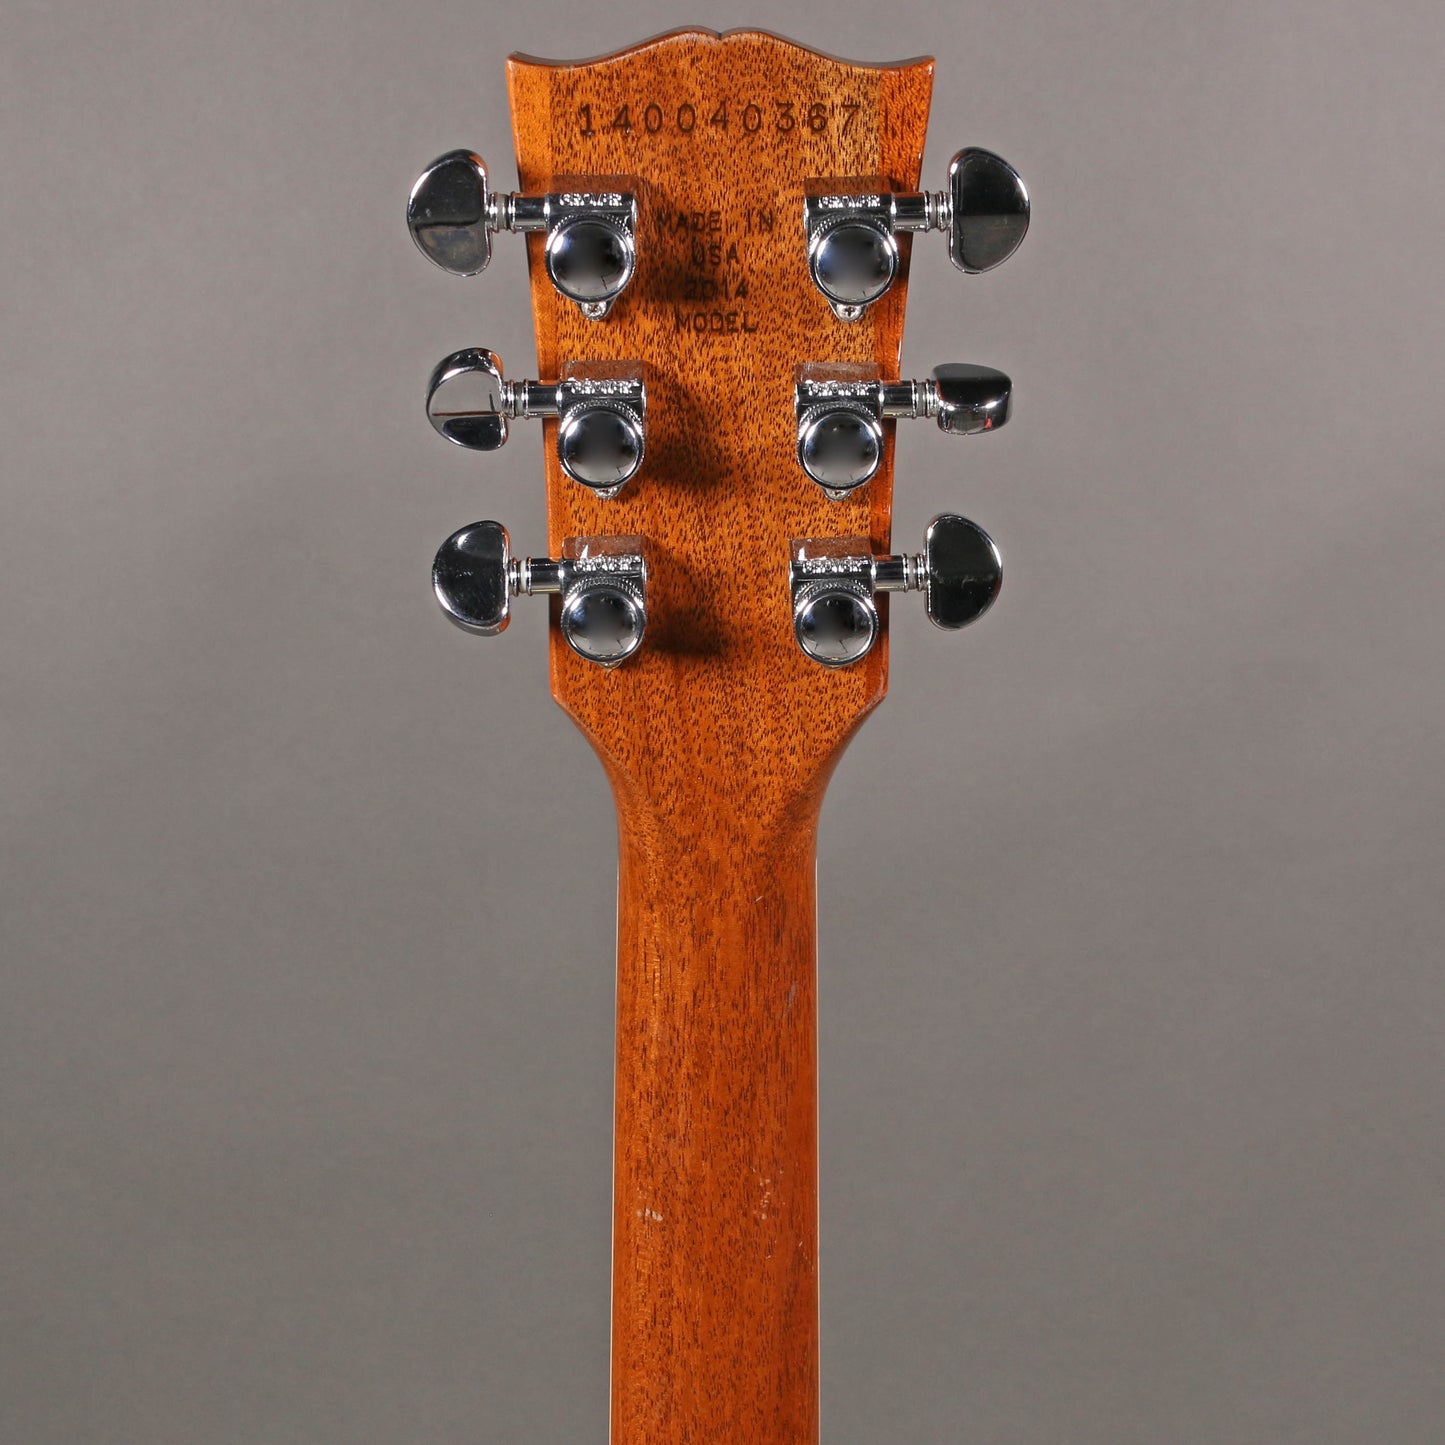 2014 Gibson 120th Anniversary Les Paul Standard